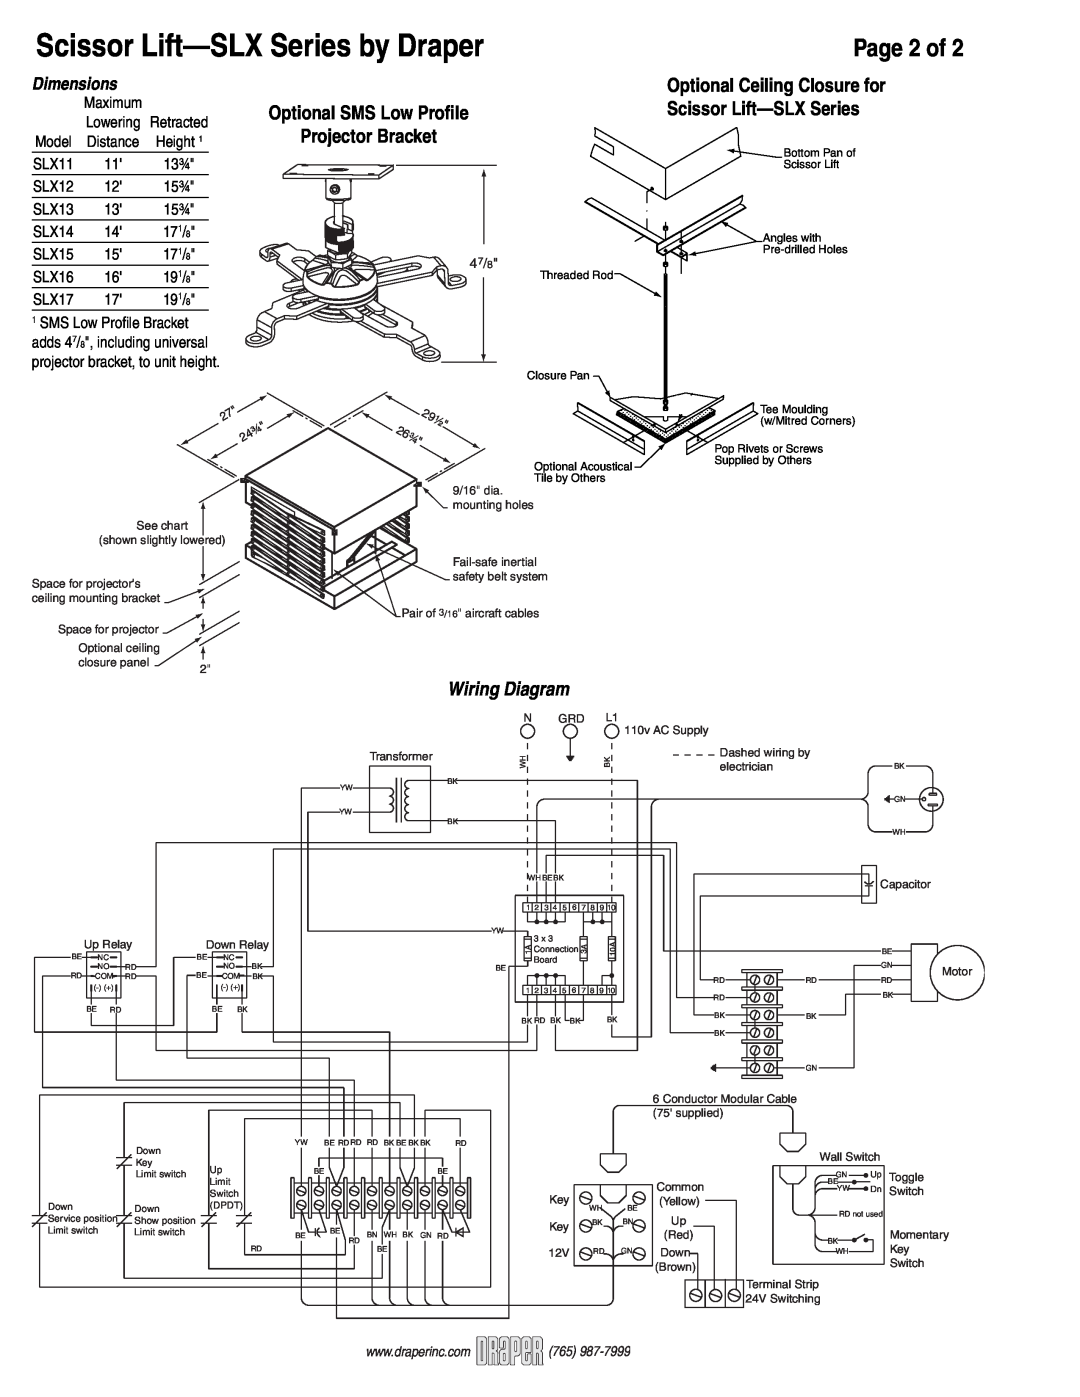 Draper SLX16 Wiring Diagram, Dimensions, Scissor Lift-SLXSeries by Draper, Page 2 of, Optional Ceiling Closure for, 47/8 